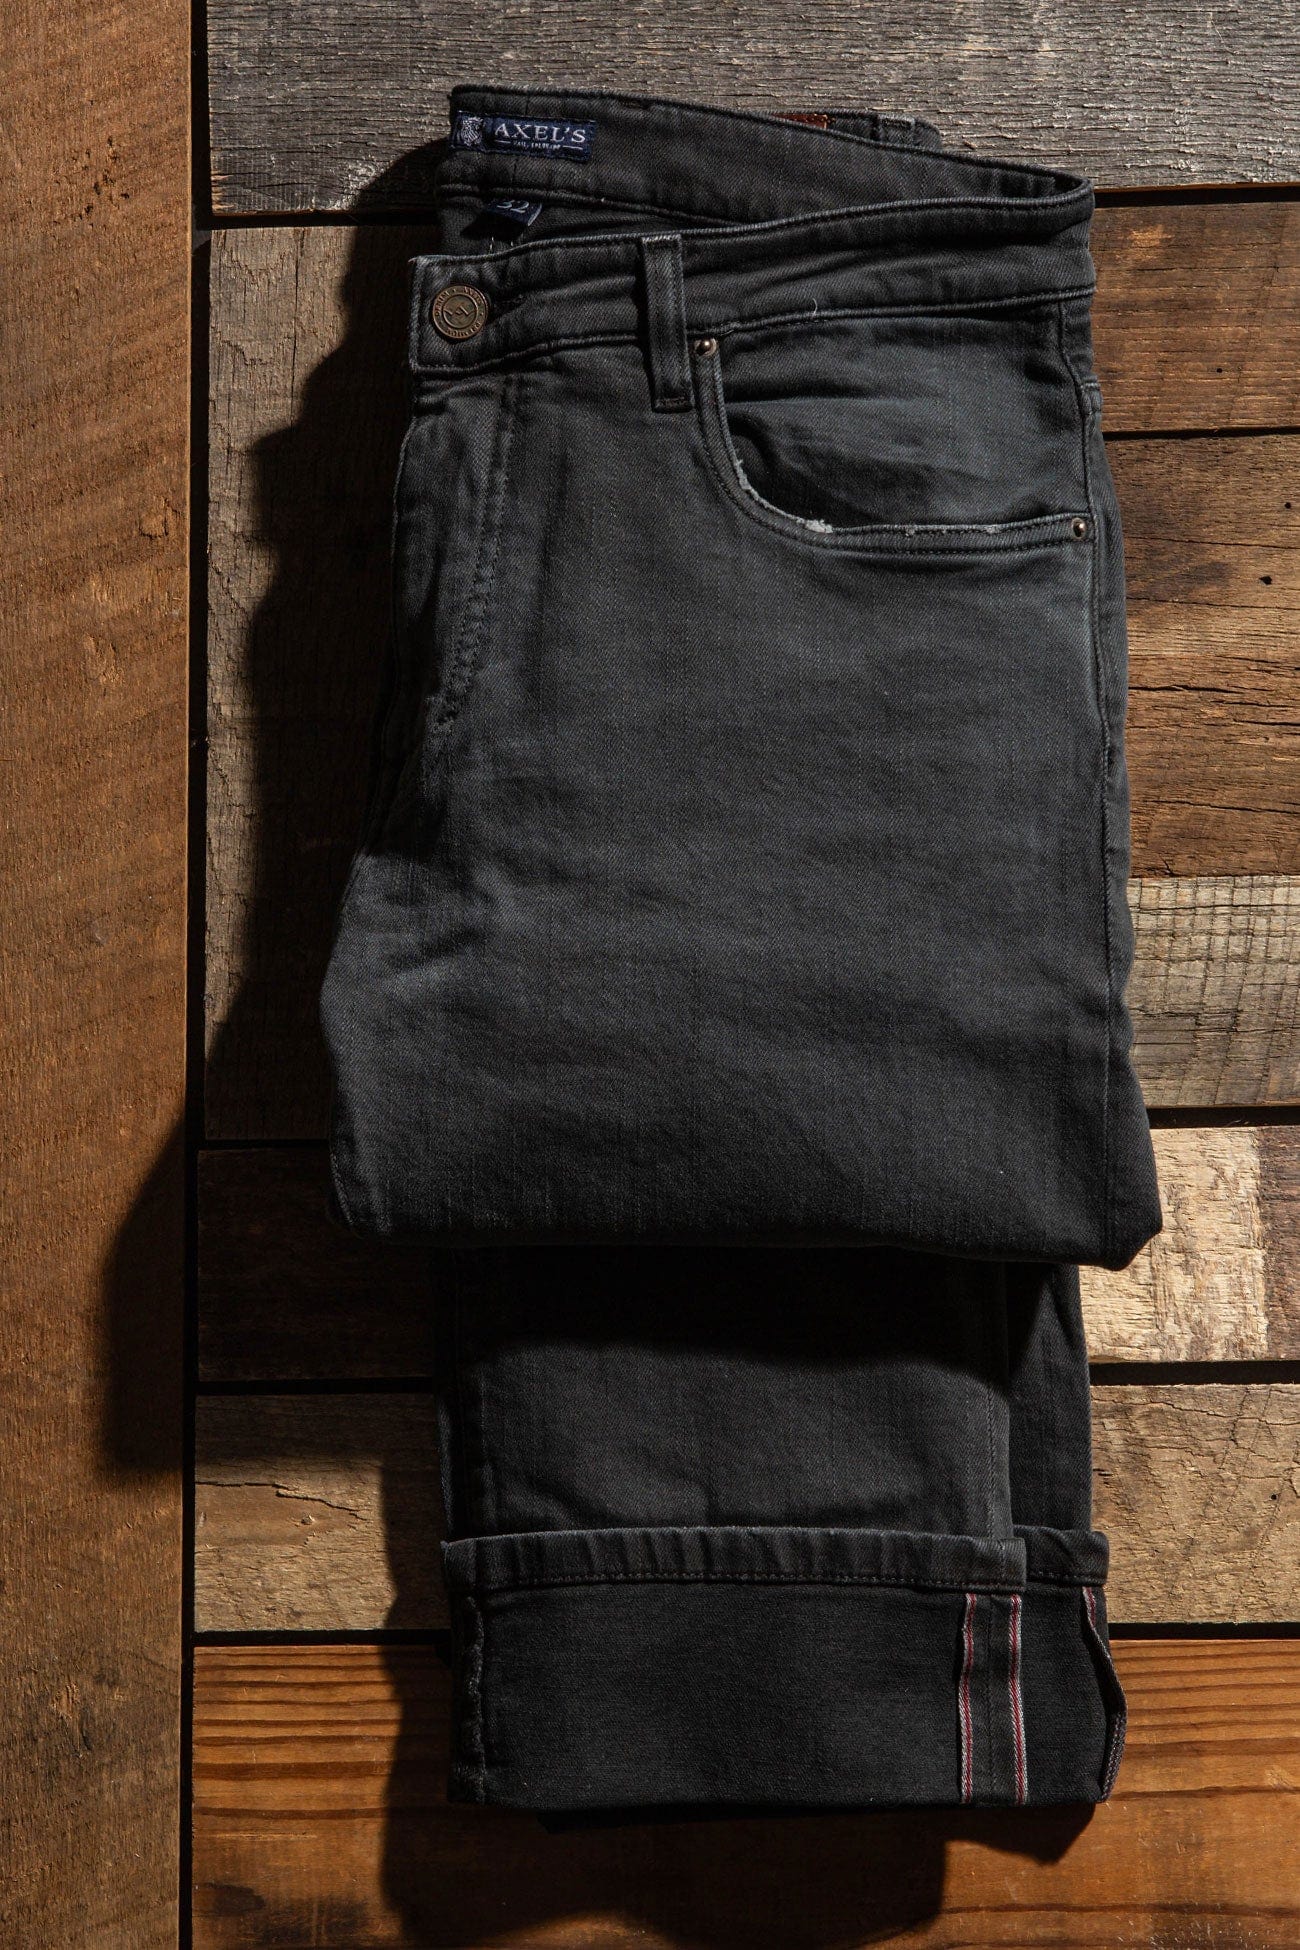 Axels Premium Denim Tucson Selvedge Denim In Anthracite Mens - Pants - 5 Pocket